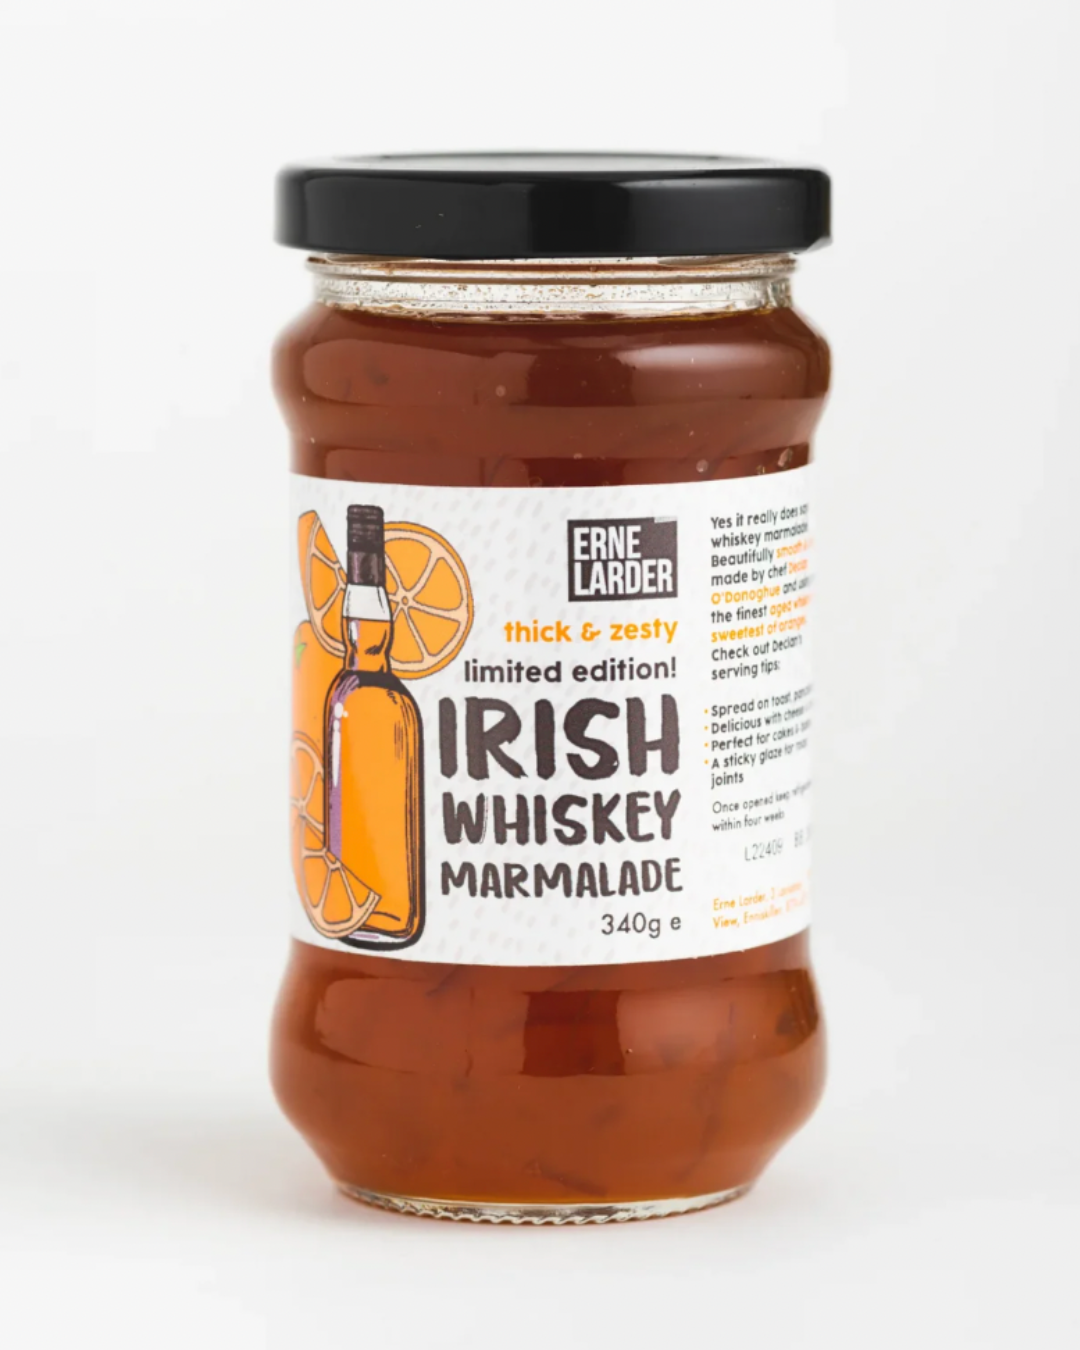 Irish whiskey marmalade